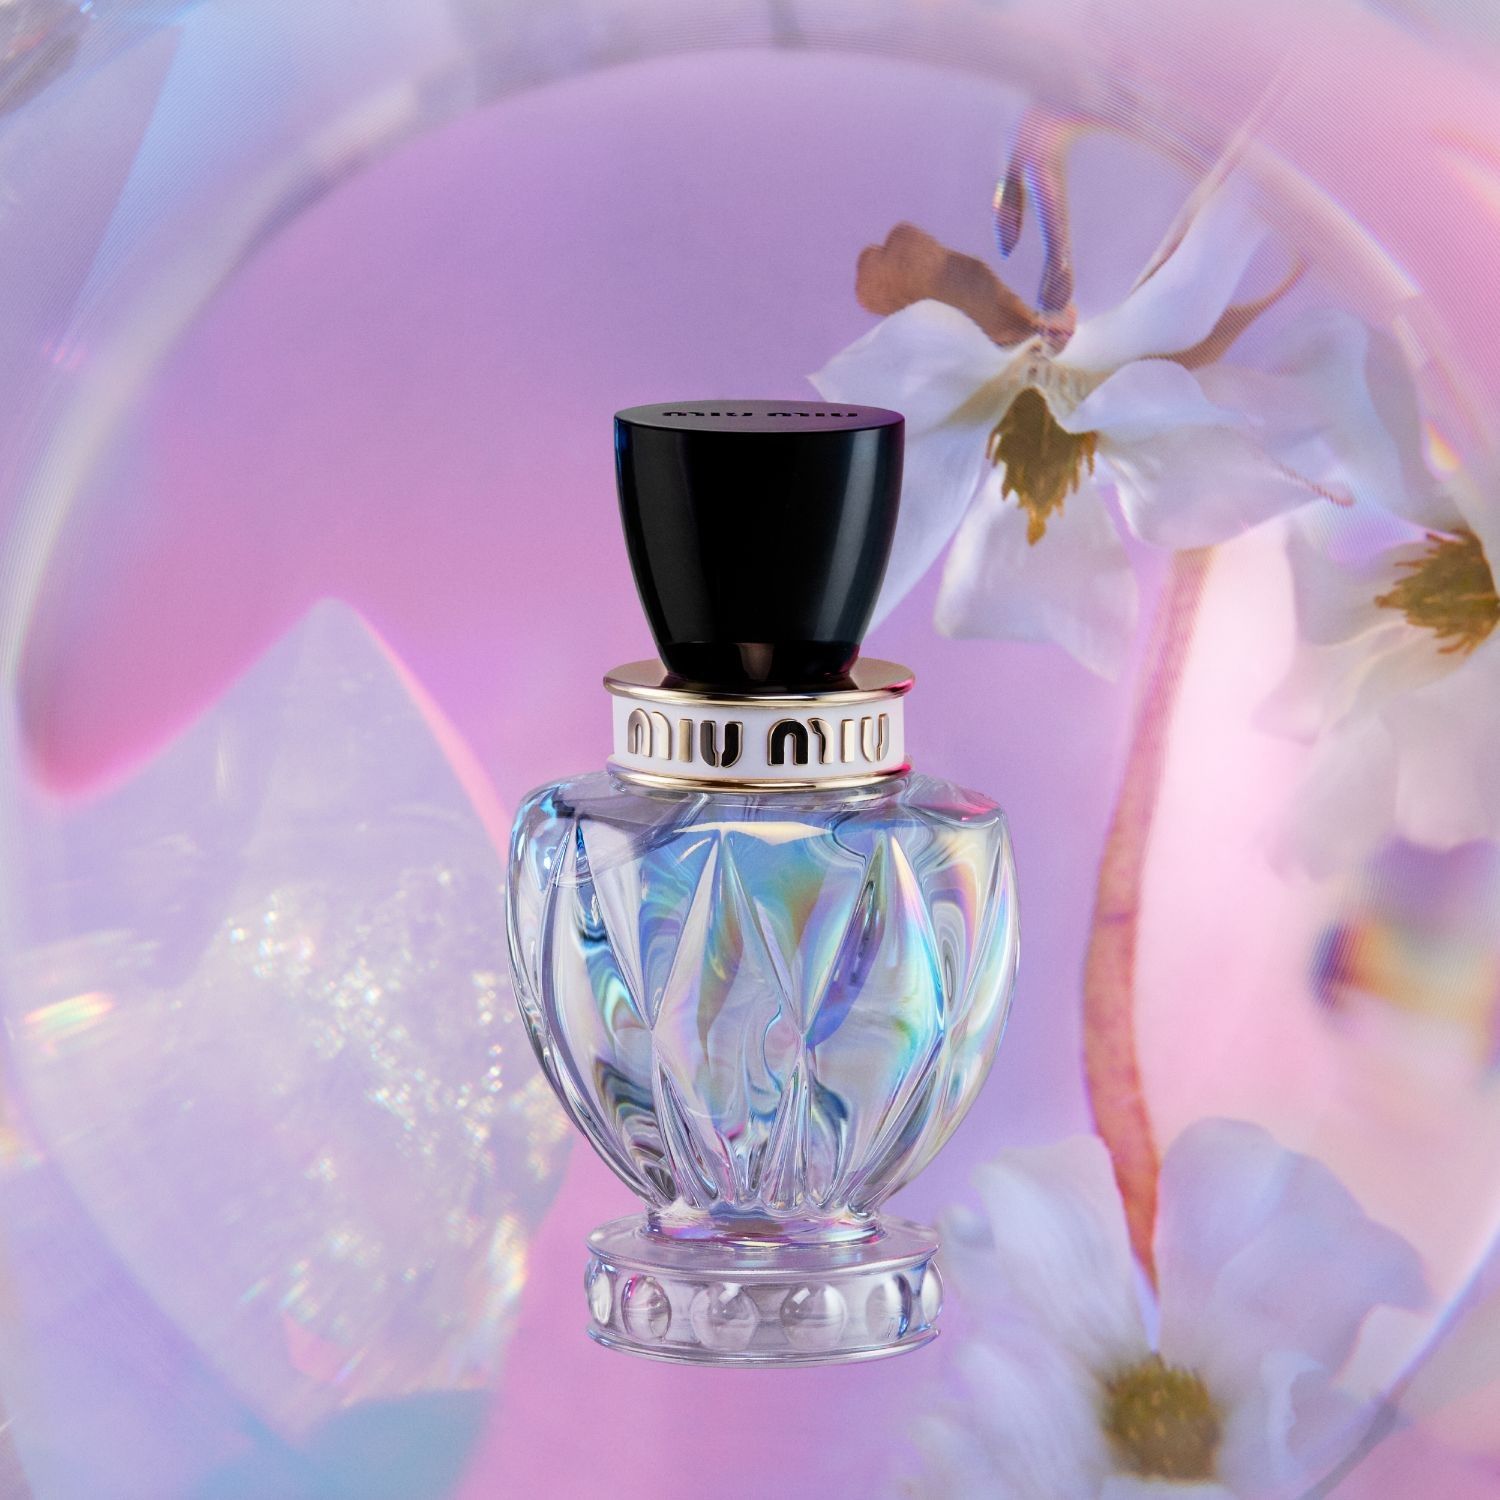 Miu Miu Twist Eau de Magnolia Miu Miu parfum - un nouveau parfum pour